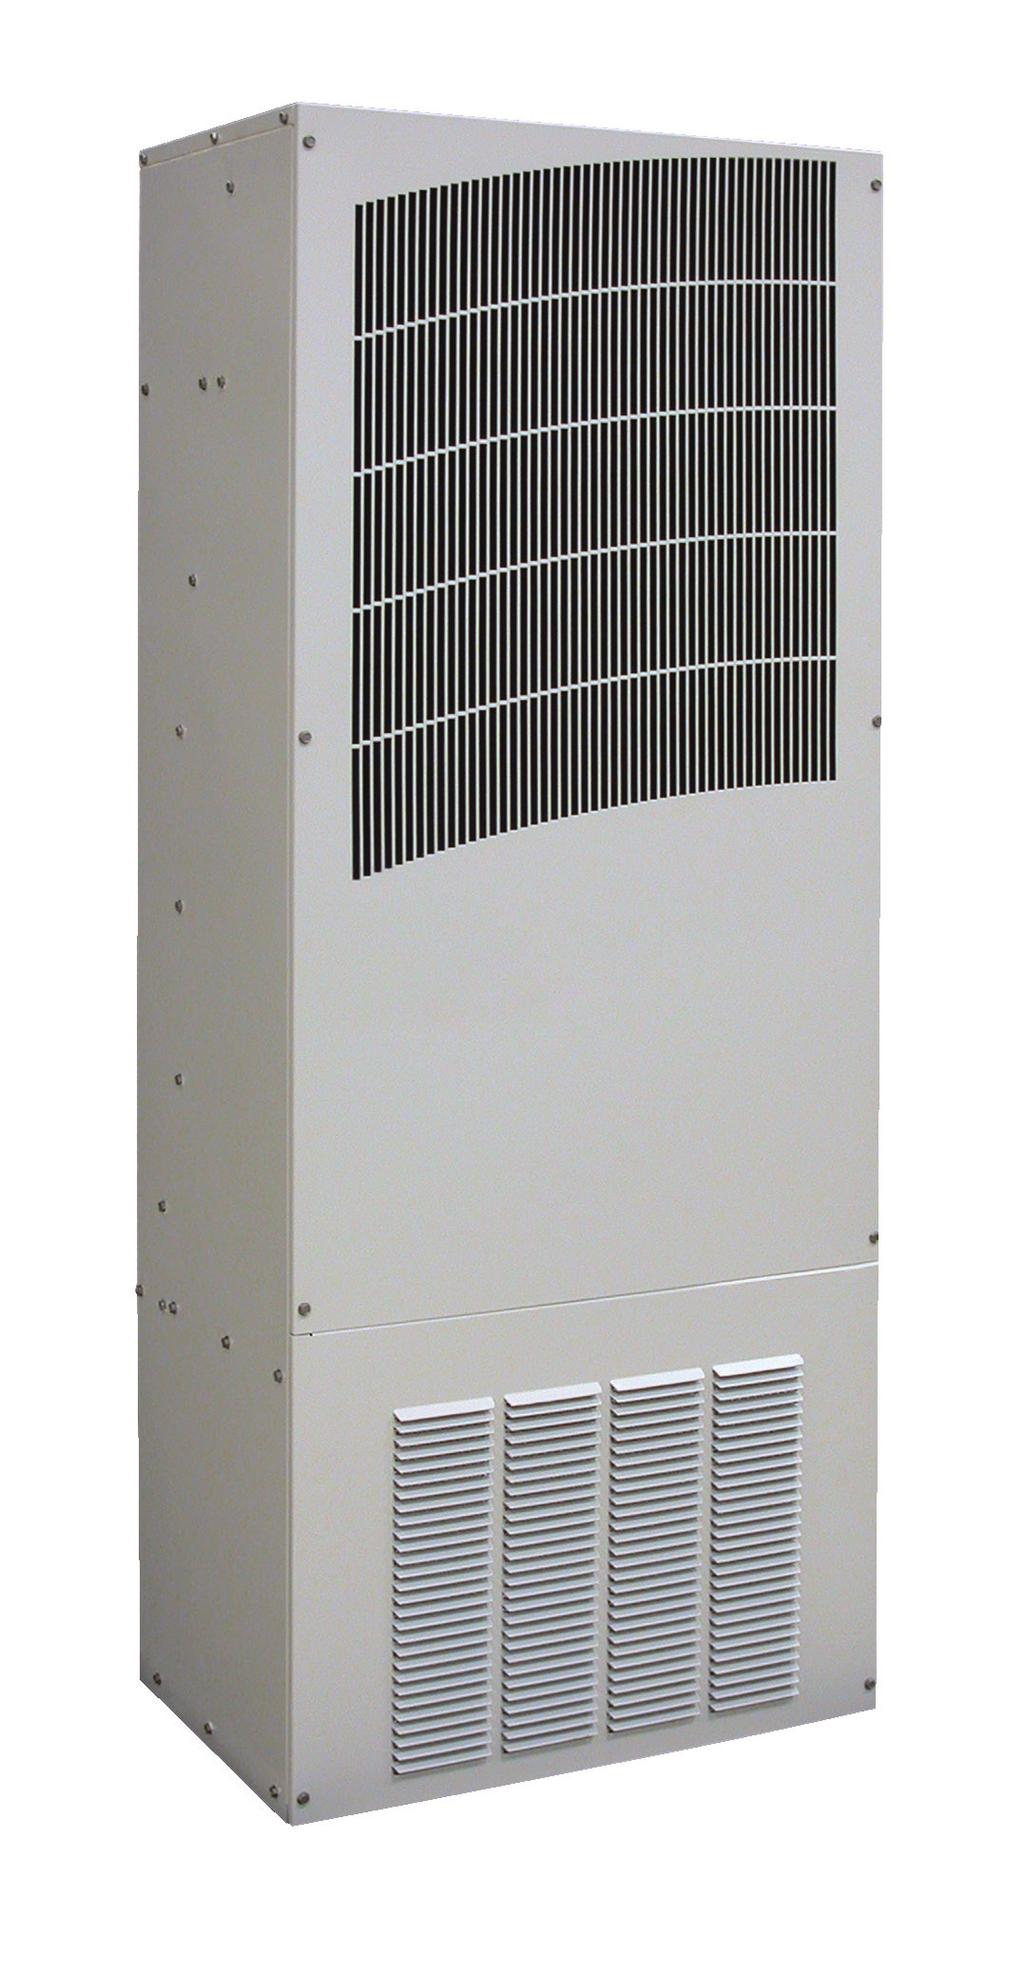 T-SERIES Air Conditioner T53 Model